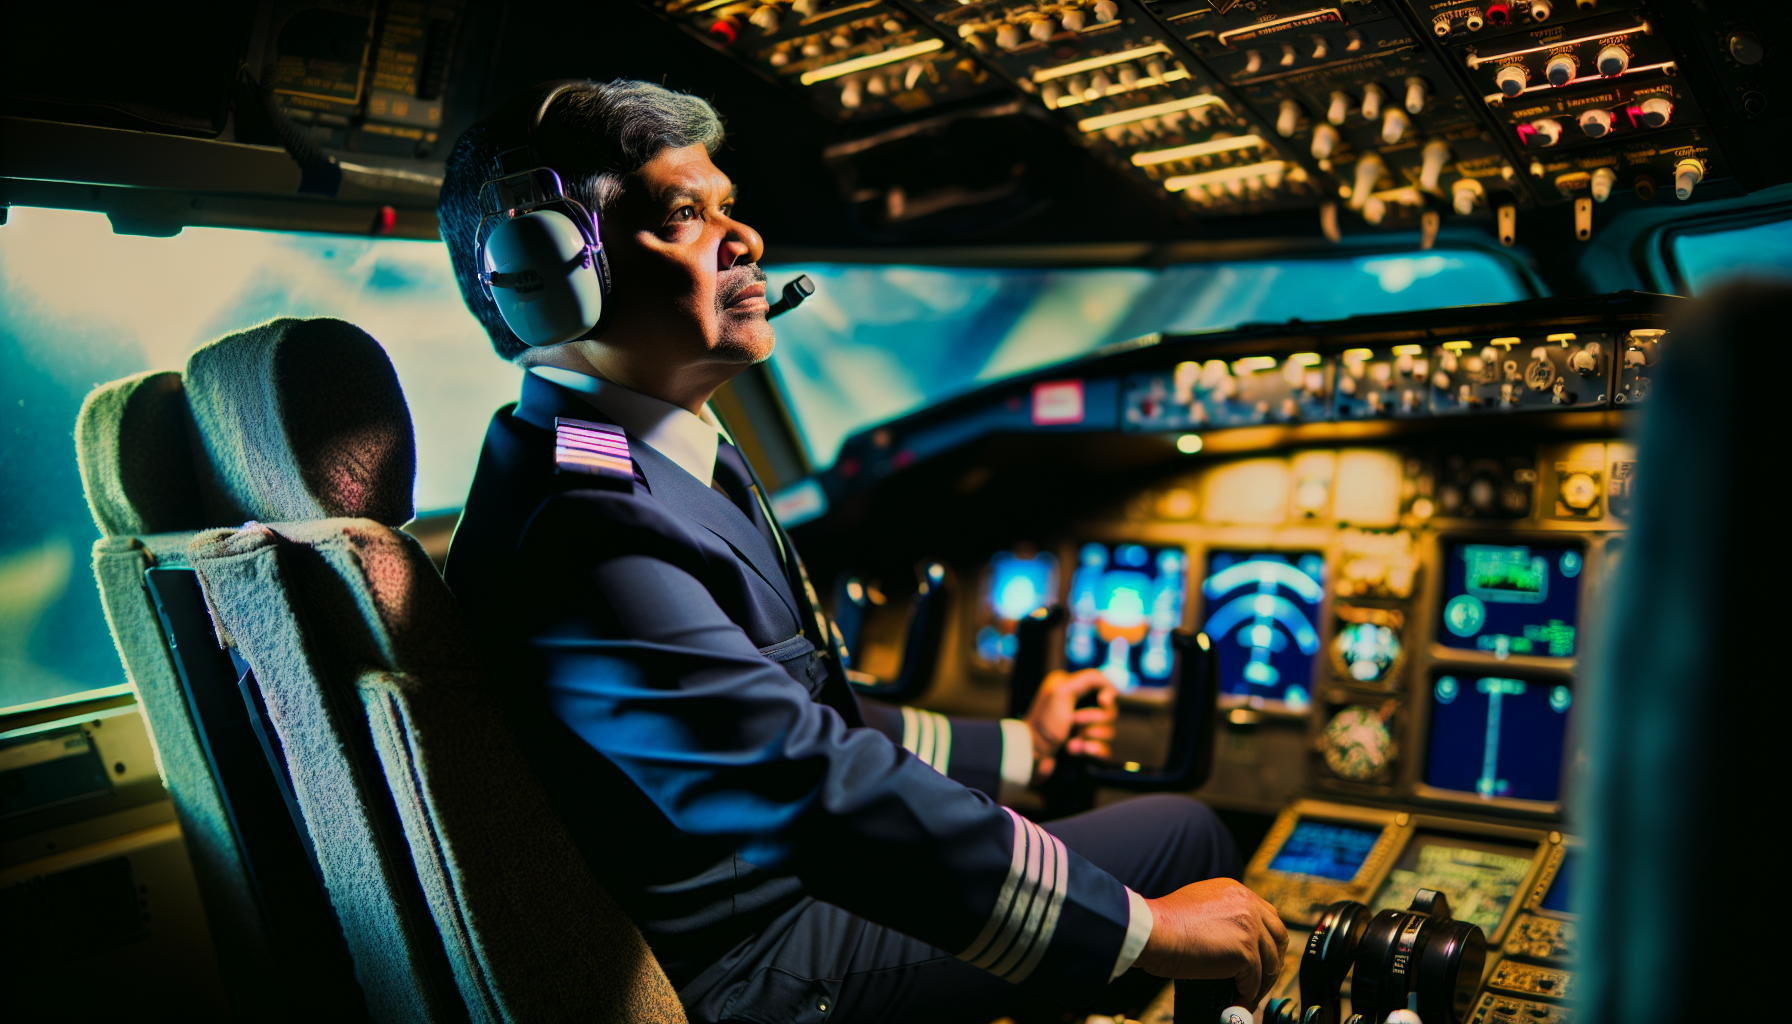 Pilot in cockpit during flight training